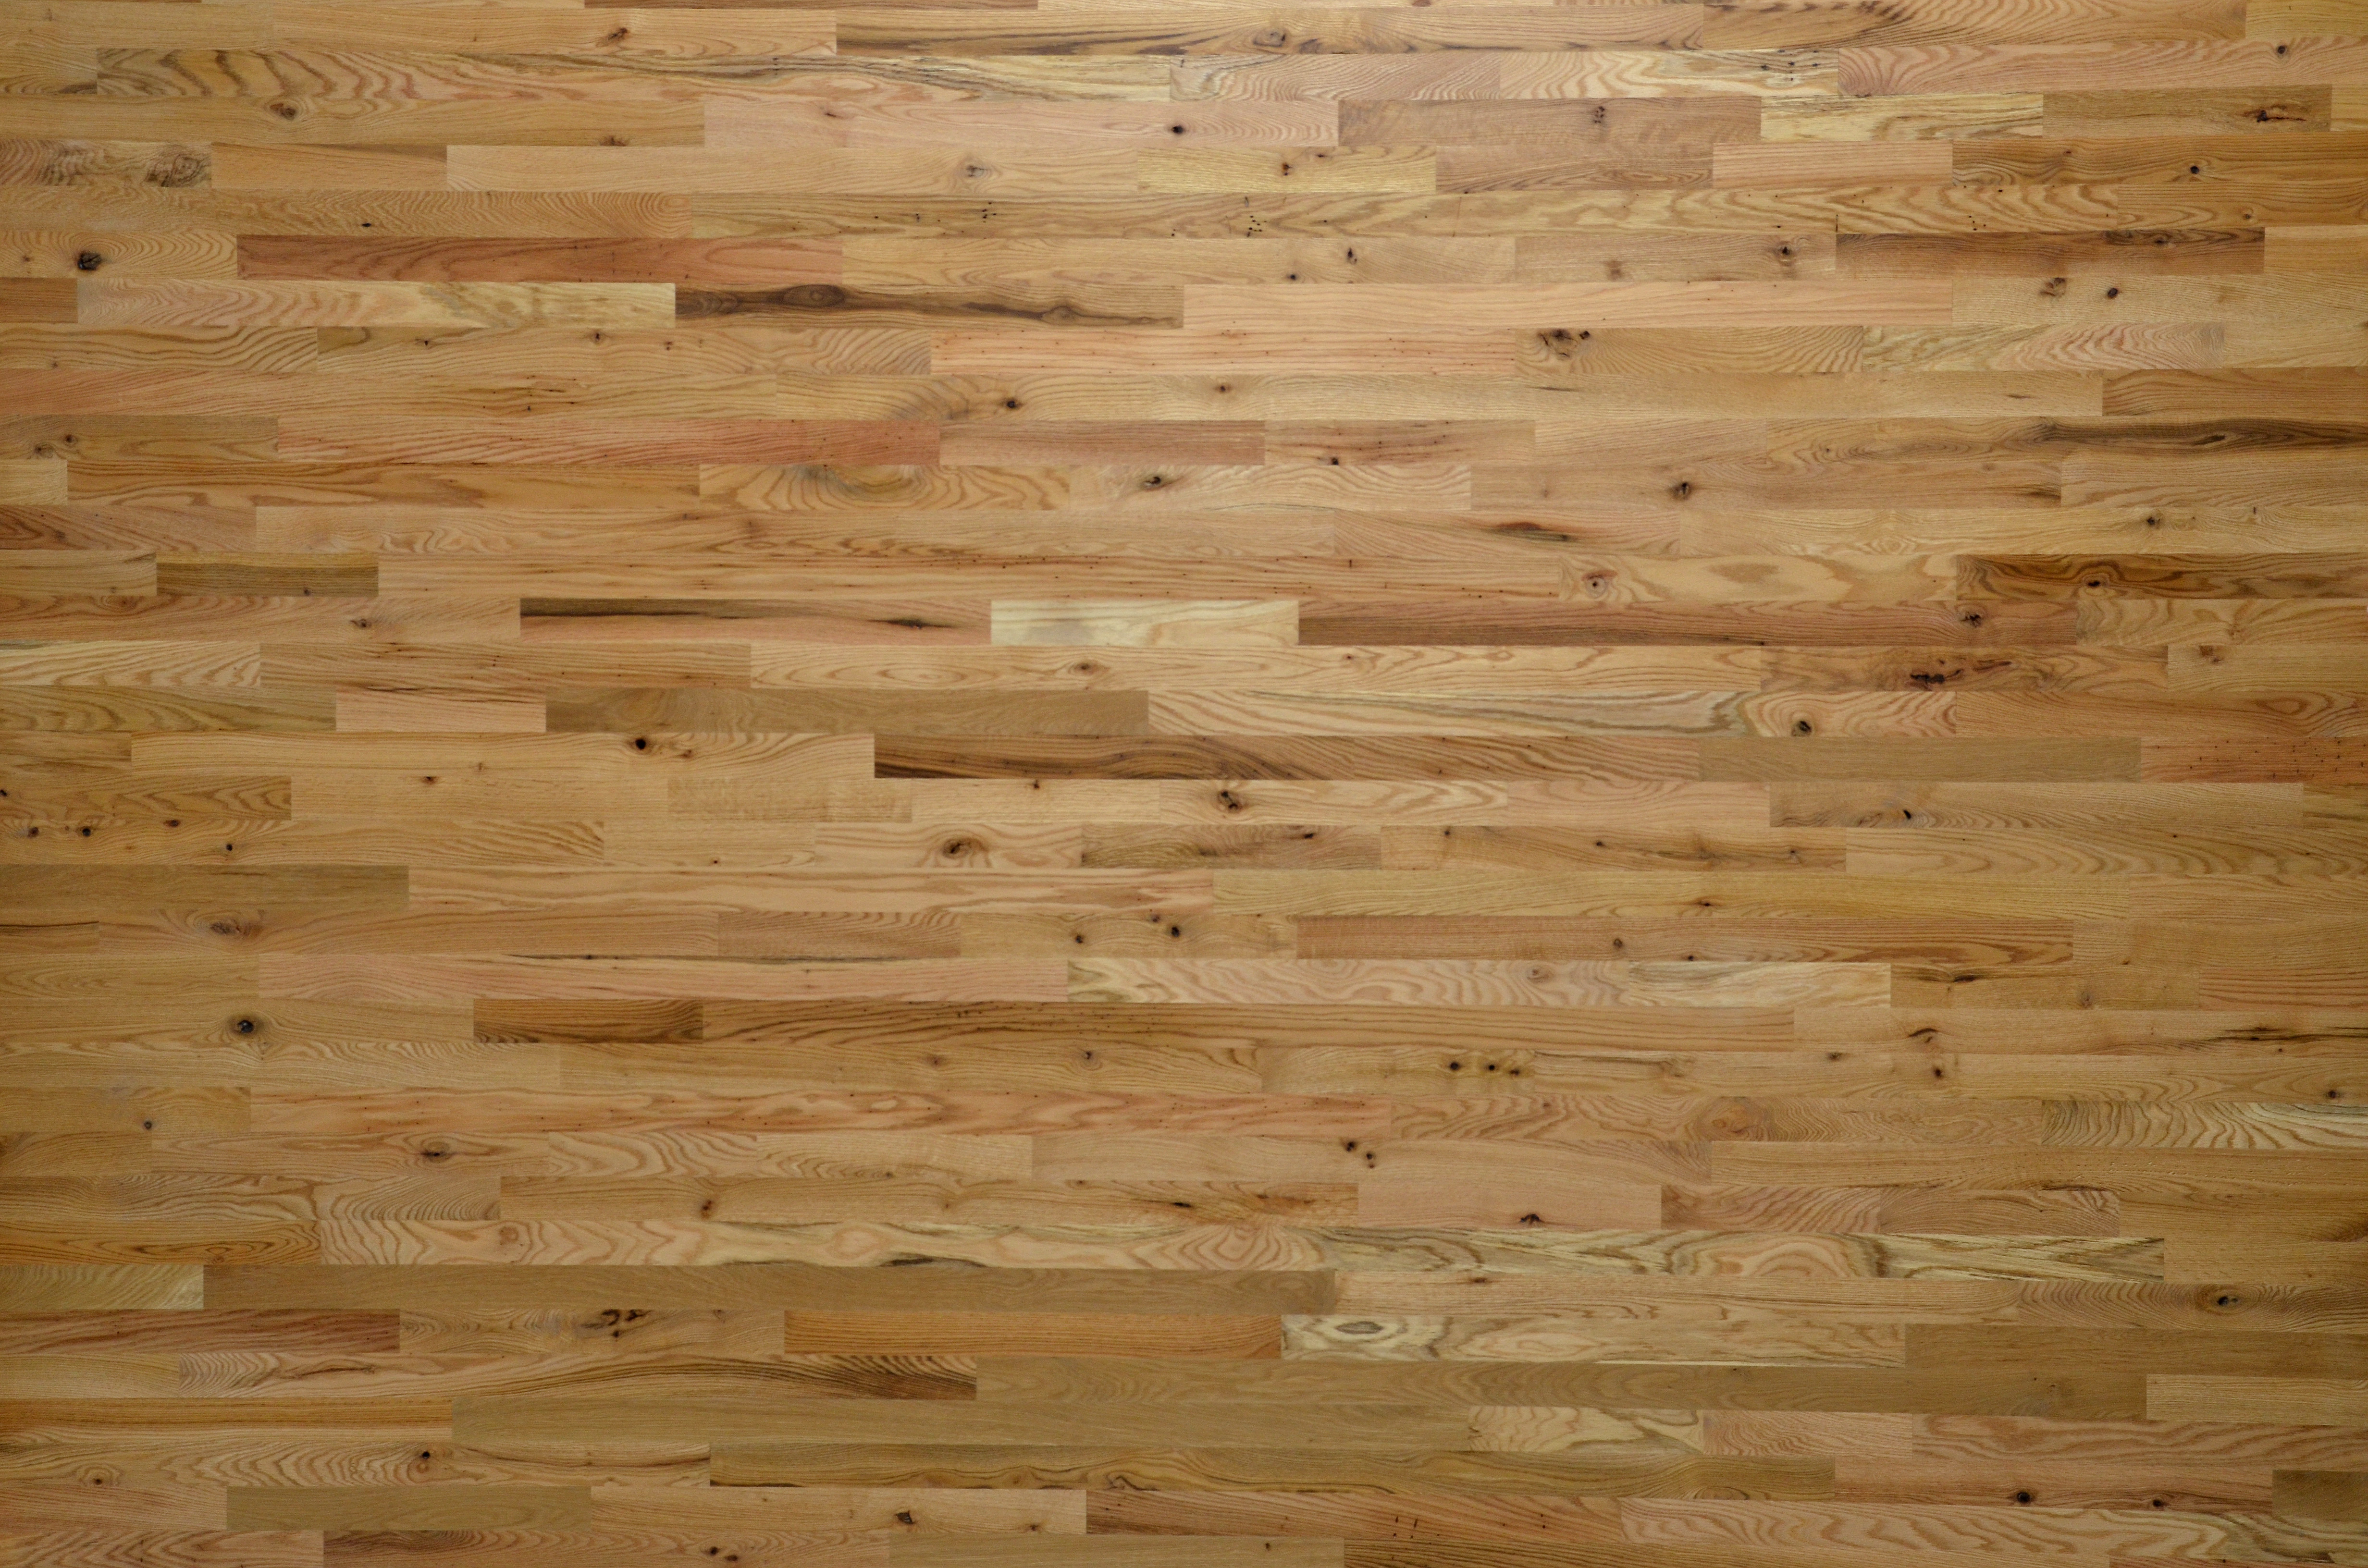 21 Wonderful 1 1 2 Inch Maple Hardwood Flooring 2024 free download 1 1 2 inch maple hardwood flooring of lacrosse hardwood flooring walnut white oak red oak hickory in 2 common red oak